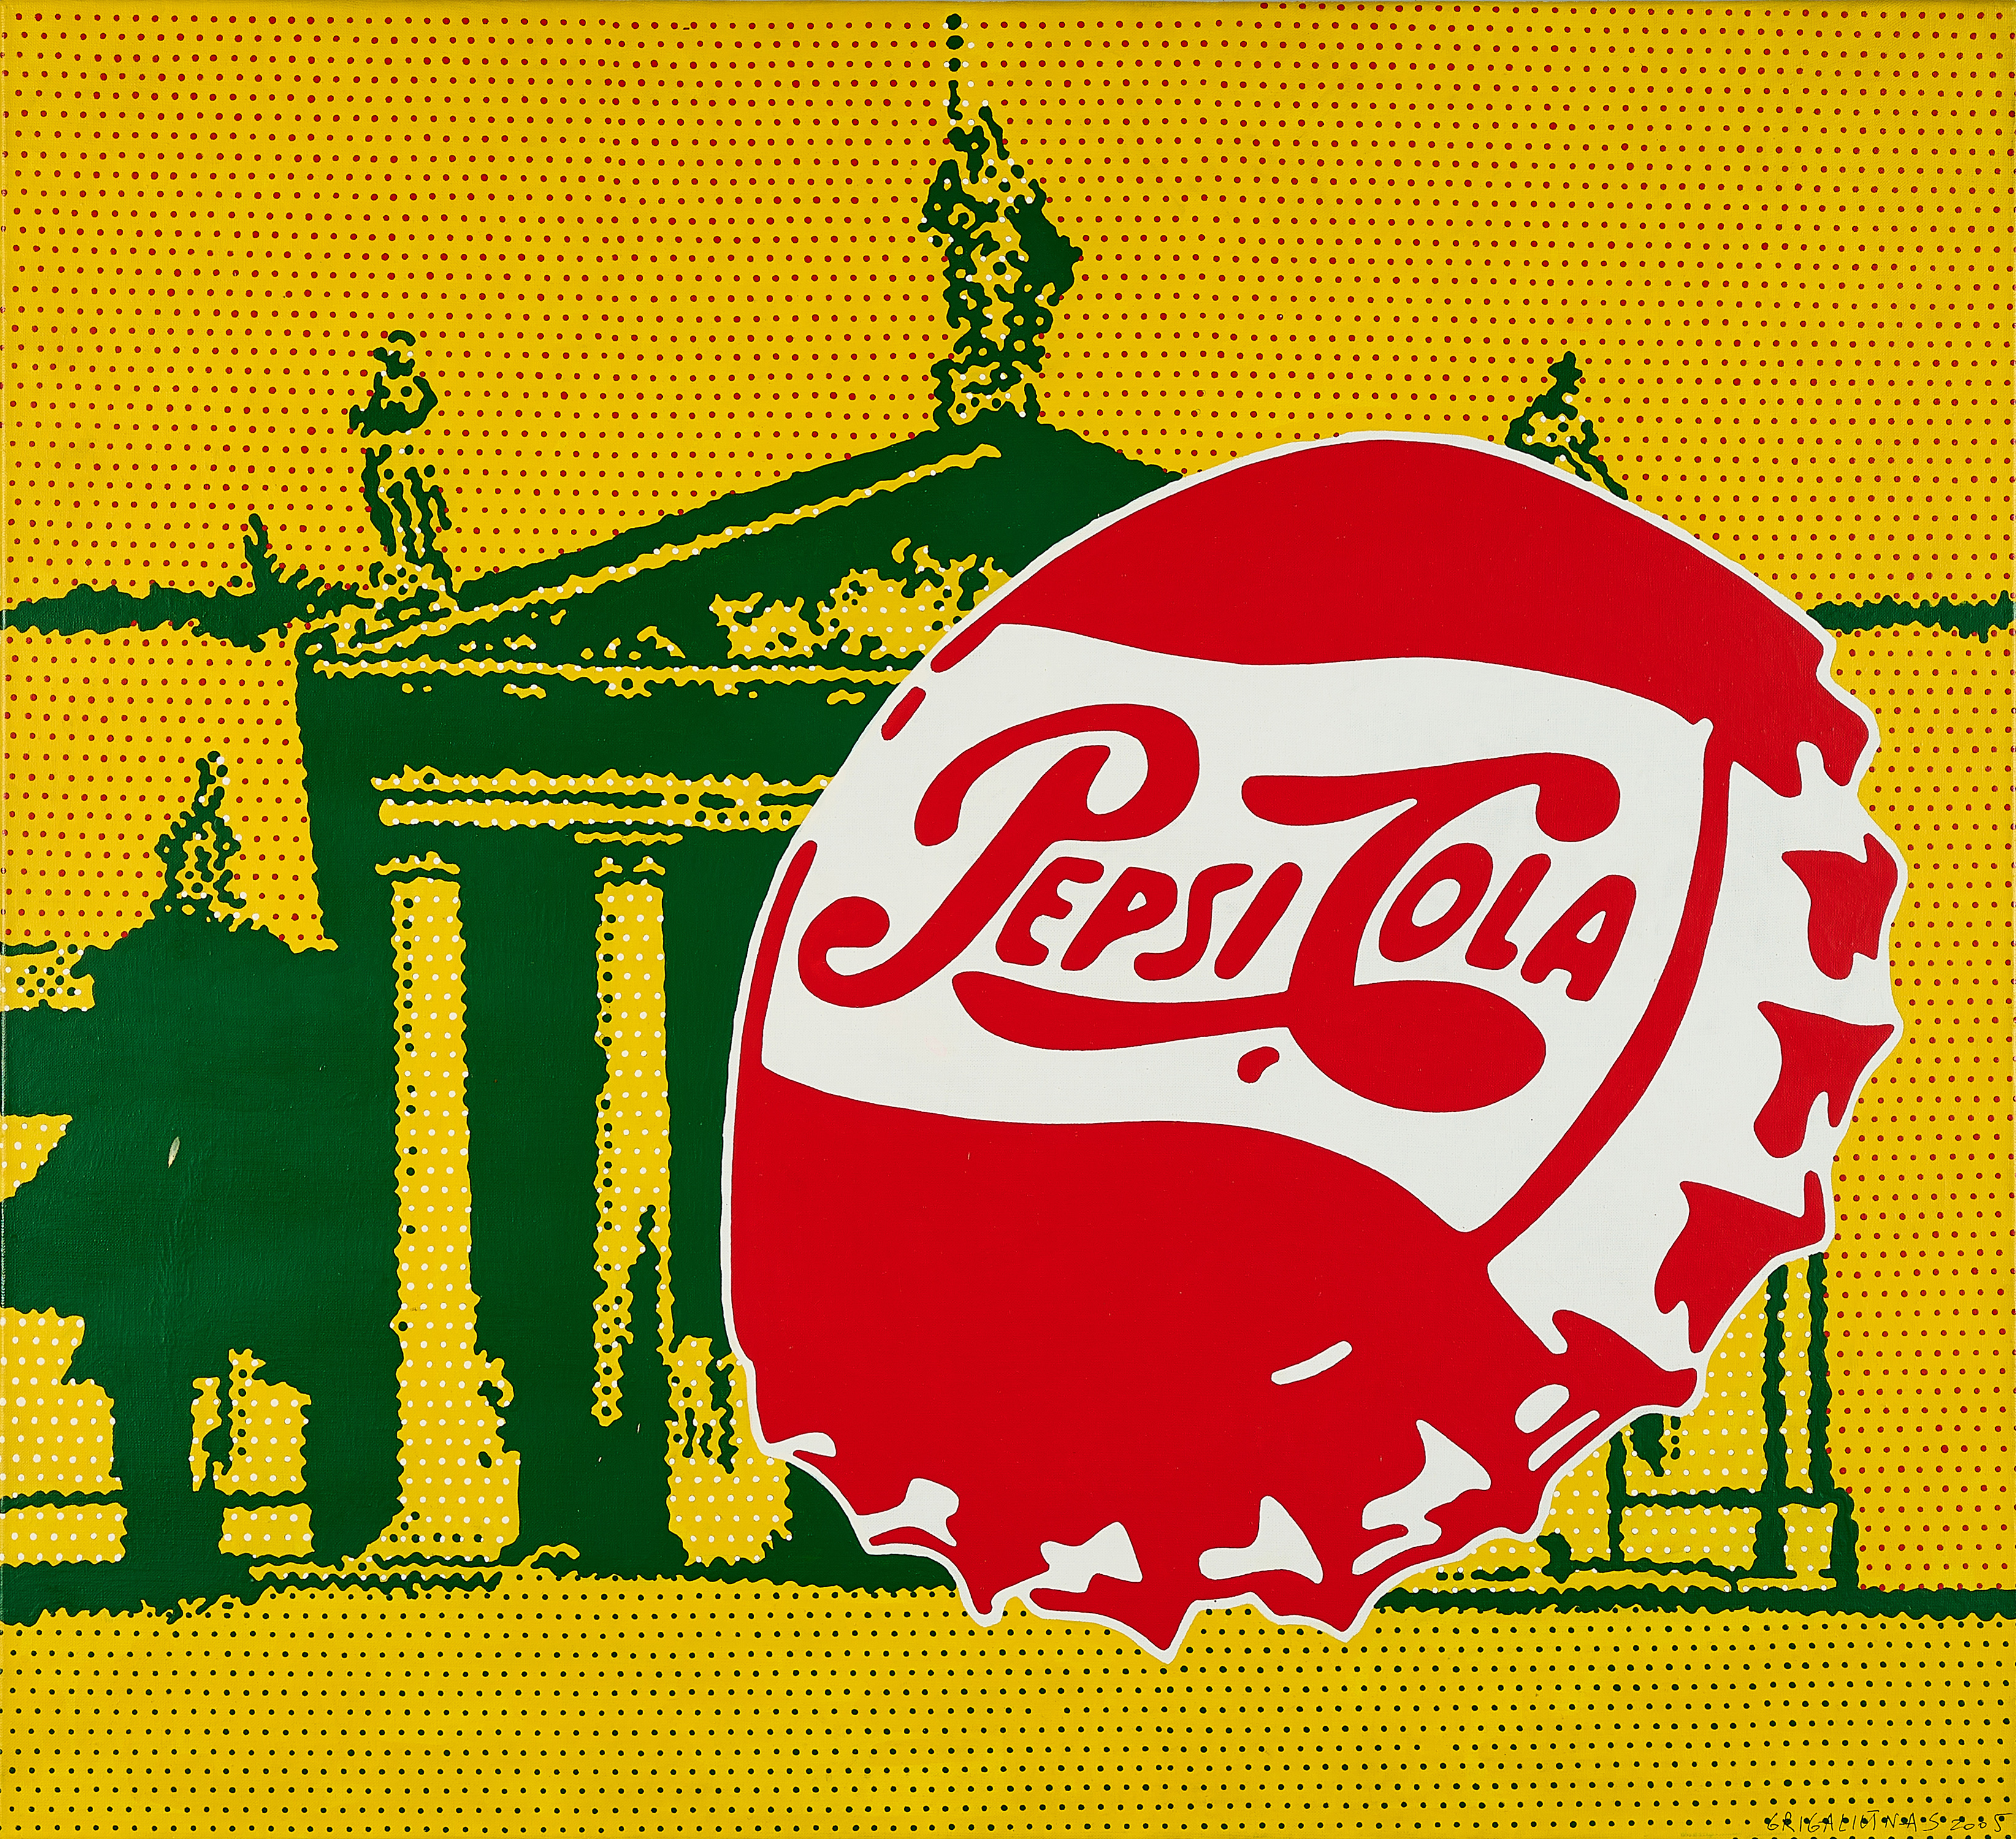 Kestutis Grigaliunas - Big Coca Cola, 78023-82, Van Ham Kunstauktionen